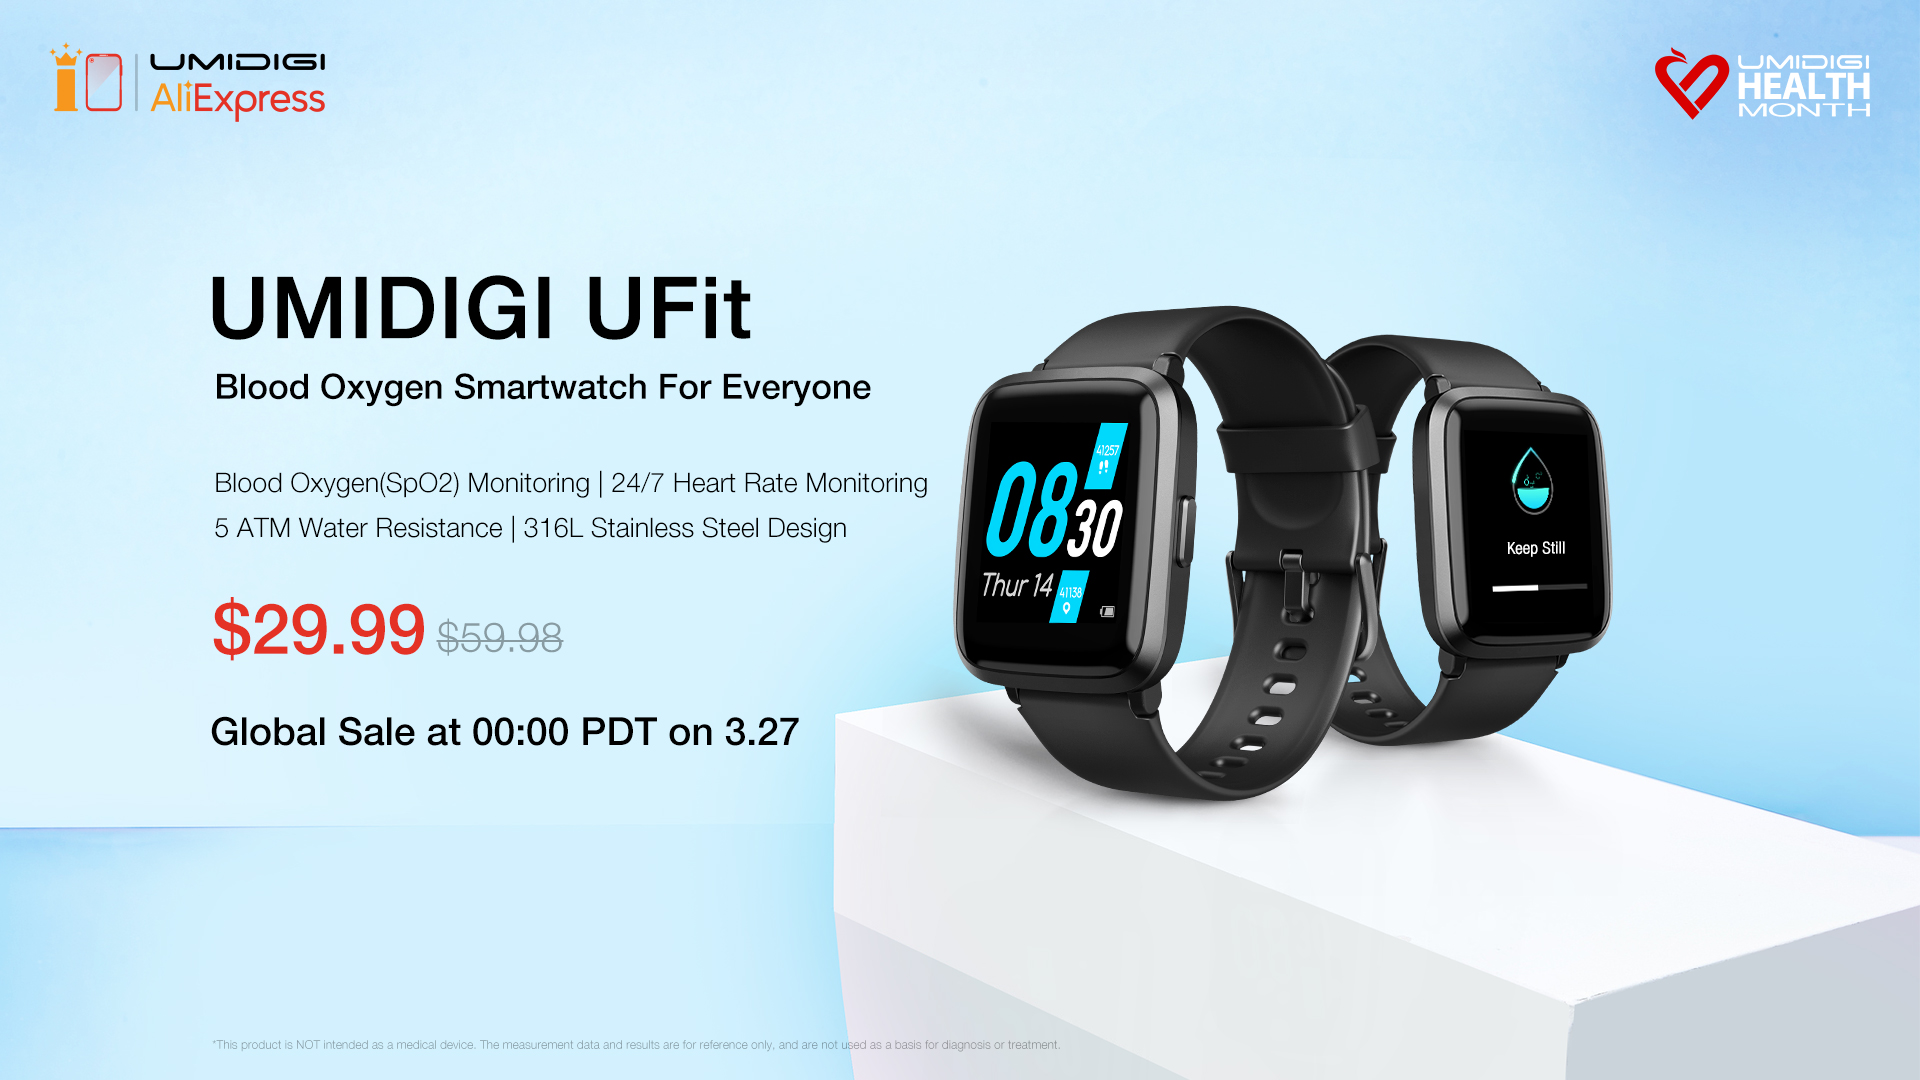 UMIDIGI on X: Introducing #UmidgiUFit, blood oxygen smartwatch